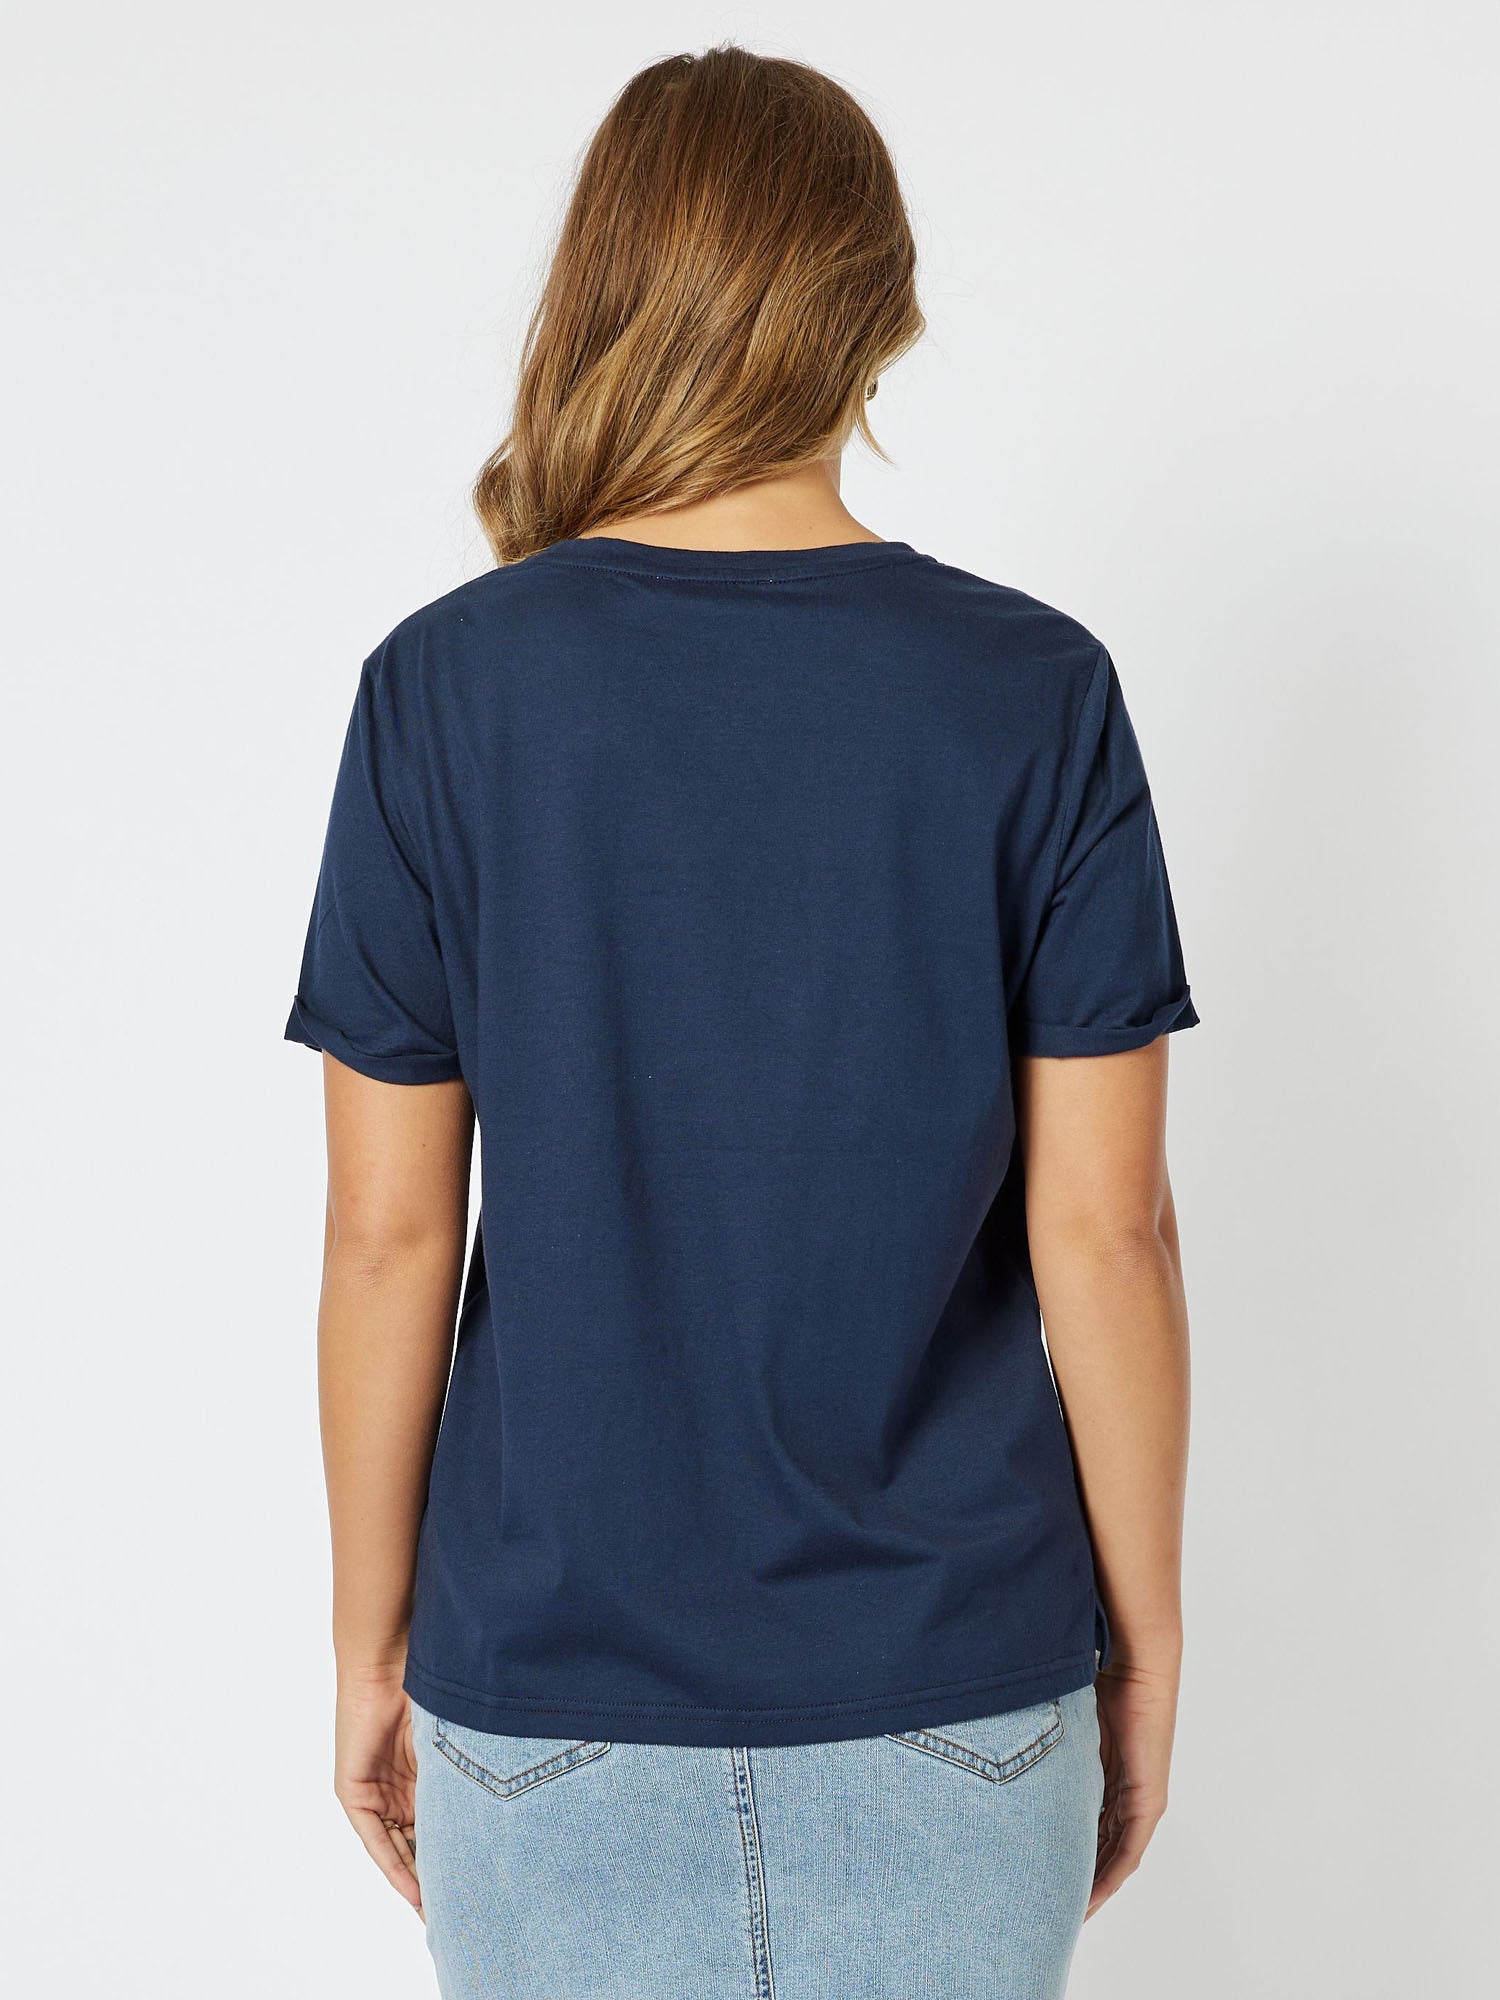 Poochi Cotton Print T-Shirt - Navy